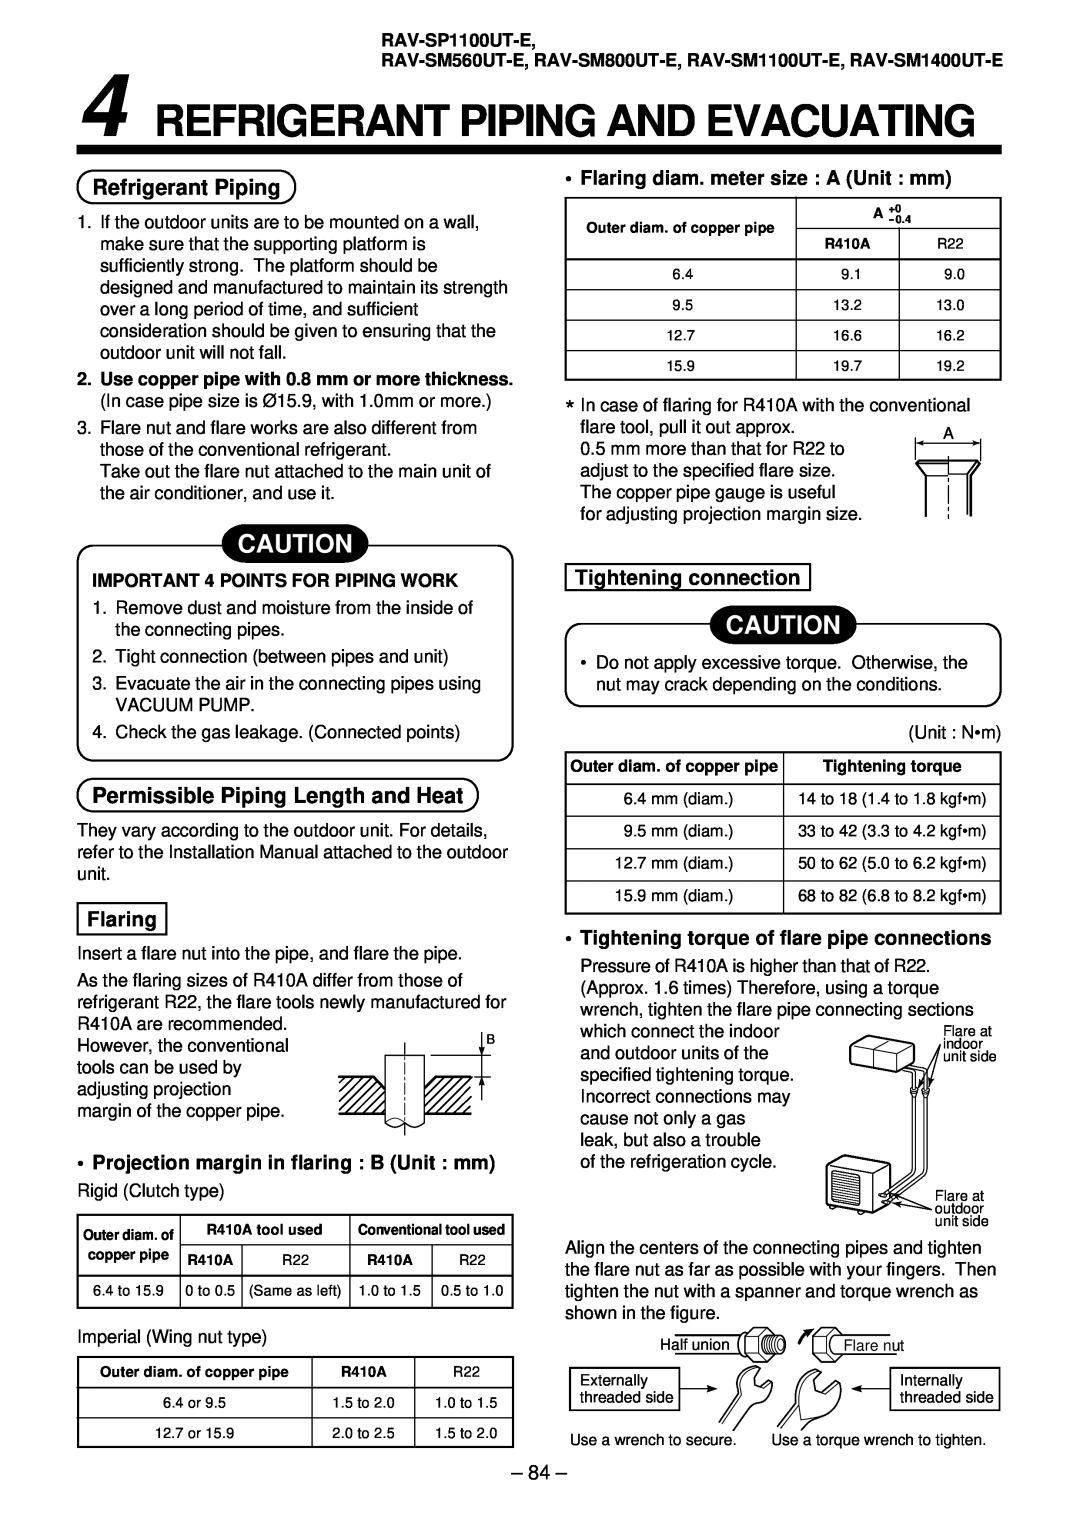 Toshiba RAV-SM1101AT-E Refrigerant Piping And Evacuating, Permissible Piping Length and Heat, Flaring, RAV-SP1100UT-E 